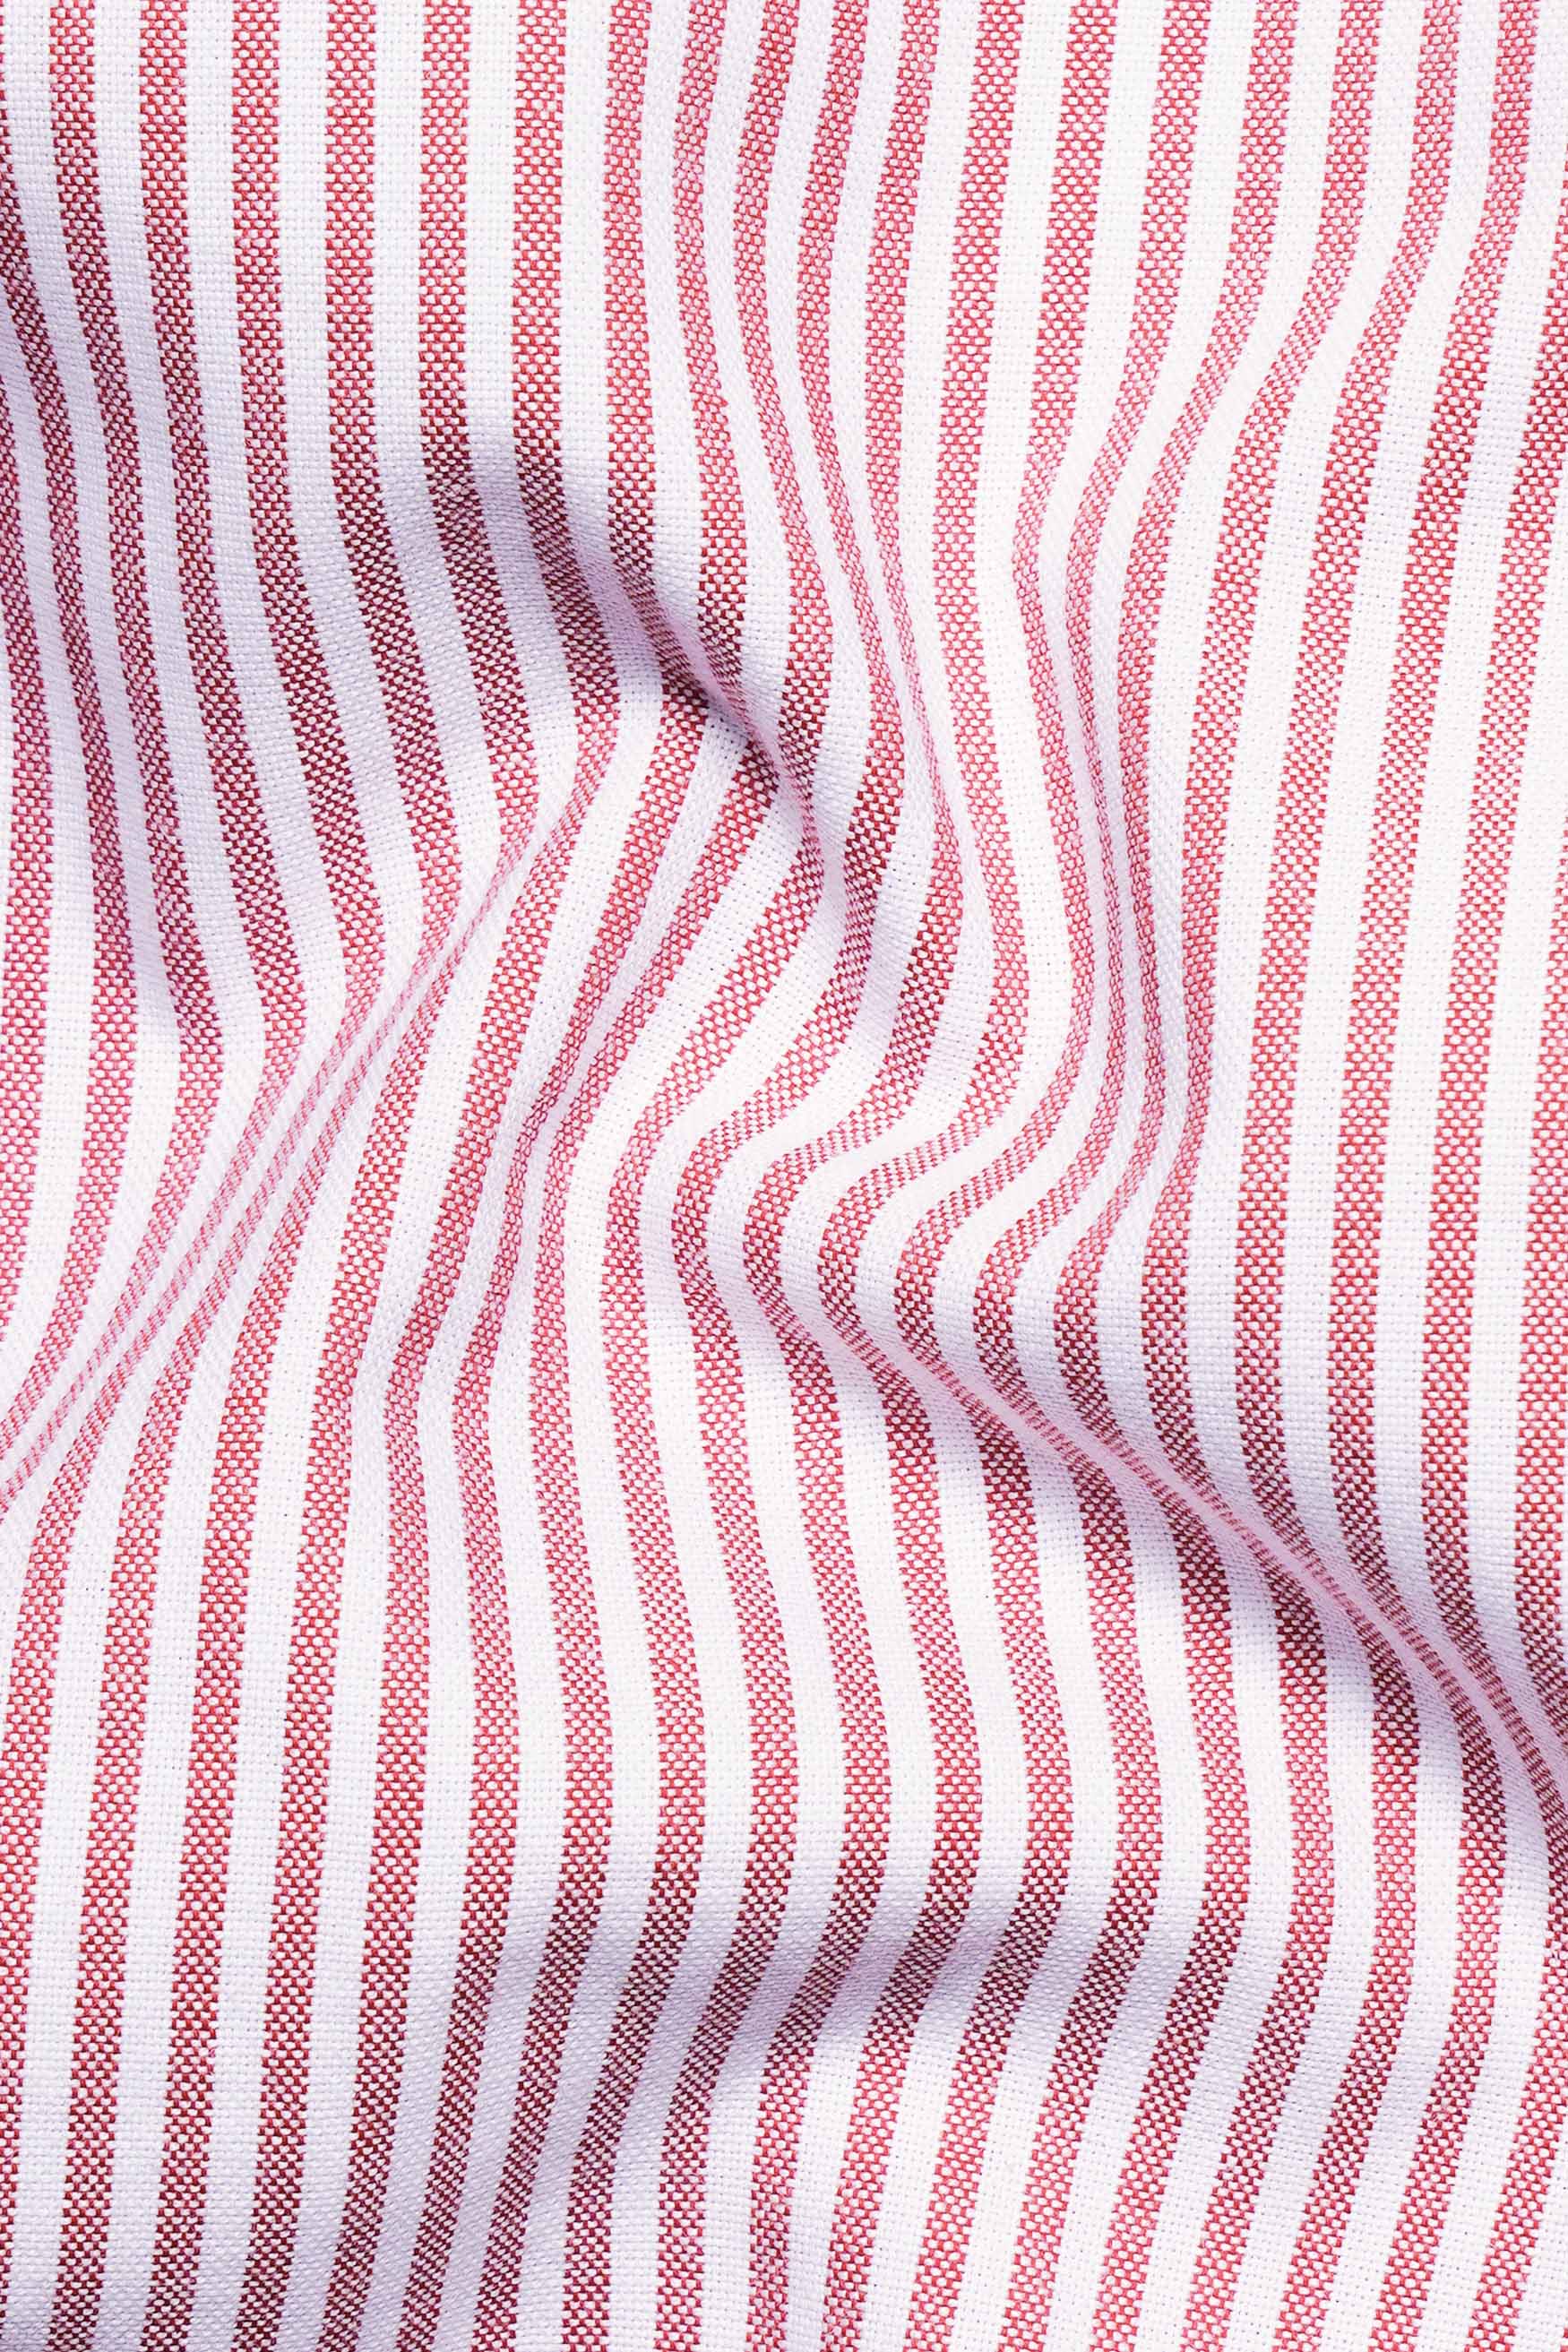 Bashful Pink and White Pin Striped Royal Oxford Shirt 11268-BD-38, 11268-BD-H-38, 11268-BD-39, 11268-BD-H-39, 11268-BD-40, 11268-BD-H-40, 11268-BD-42, 11268-BD-H-42, 11268-BD-44, 11268-BD-H-44, 11268-BD-46, 11268-BD-H-46, 11268-BD-48, 11268-BD-H-48, 11268-BD-50, 11268-BD-H-50, 11268-BD-52, 11268-BD-H-52